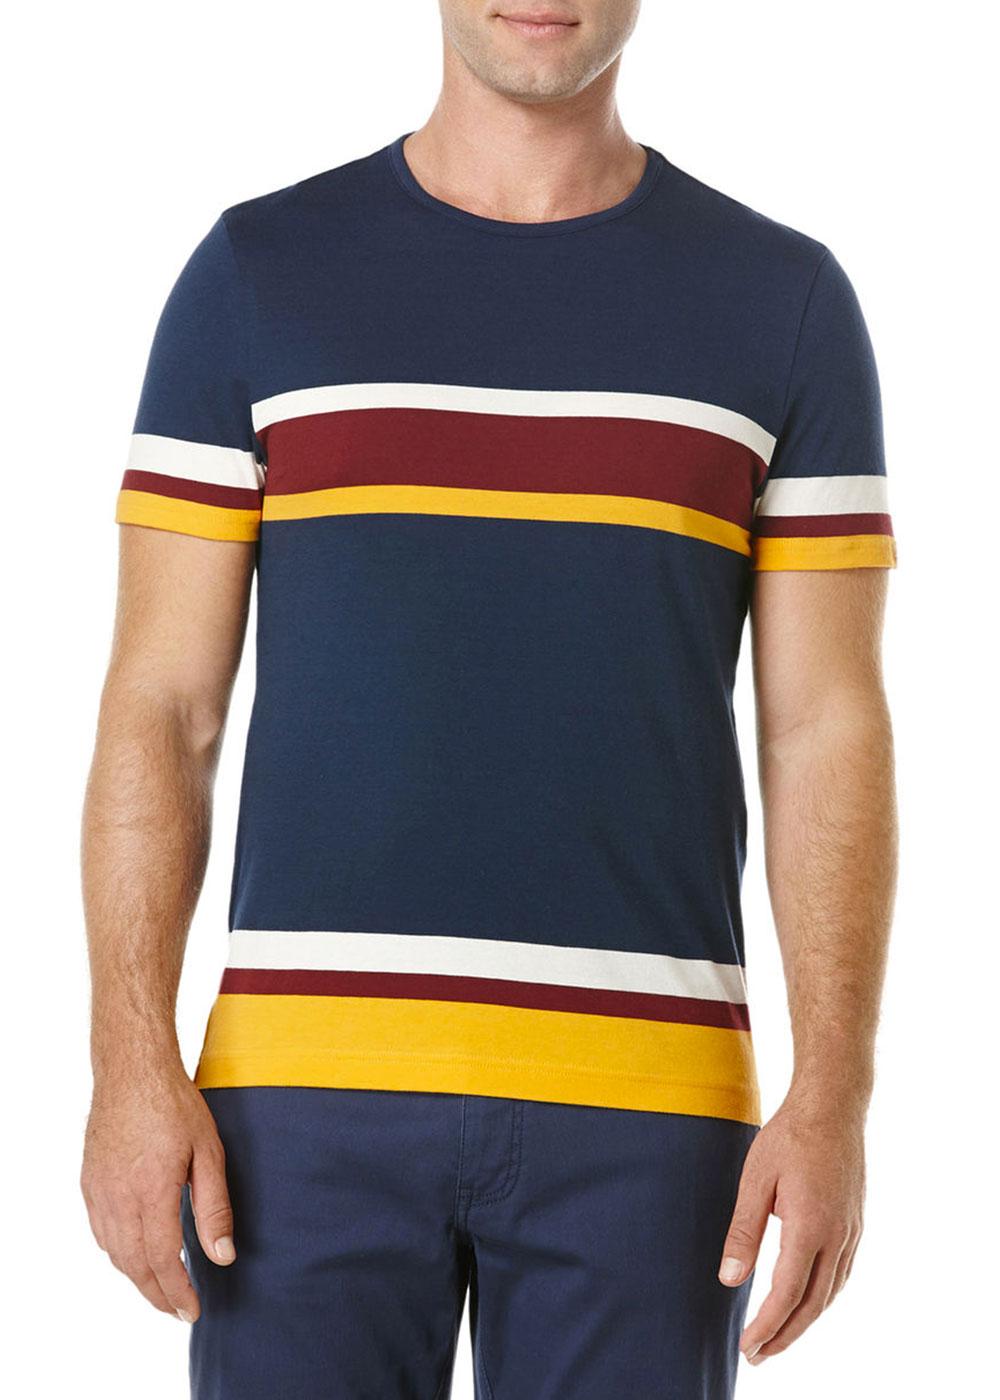 ORIGINAL PENGUIN Retro Mod Engineered Stripe T-Shirt Dress Blues